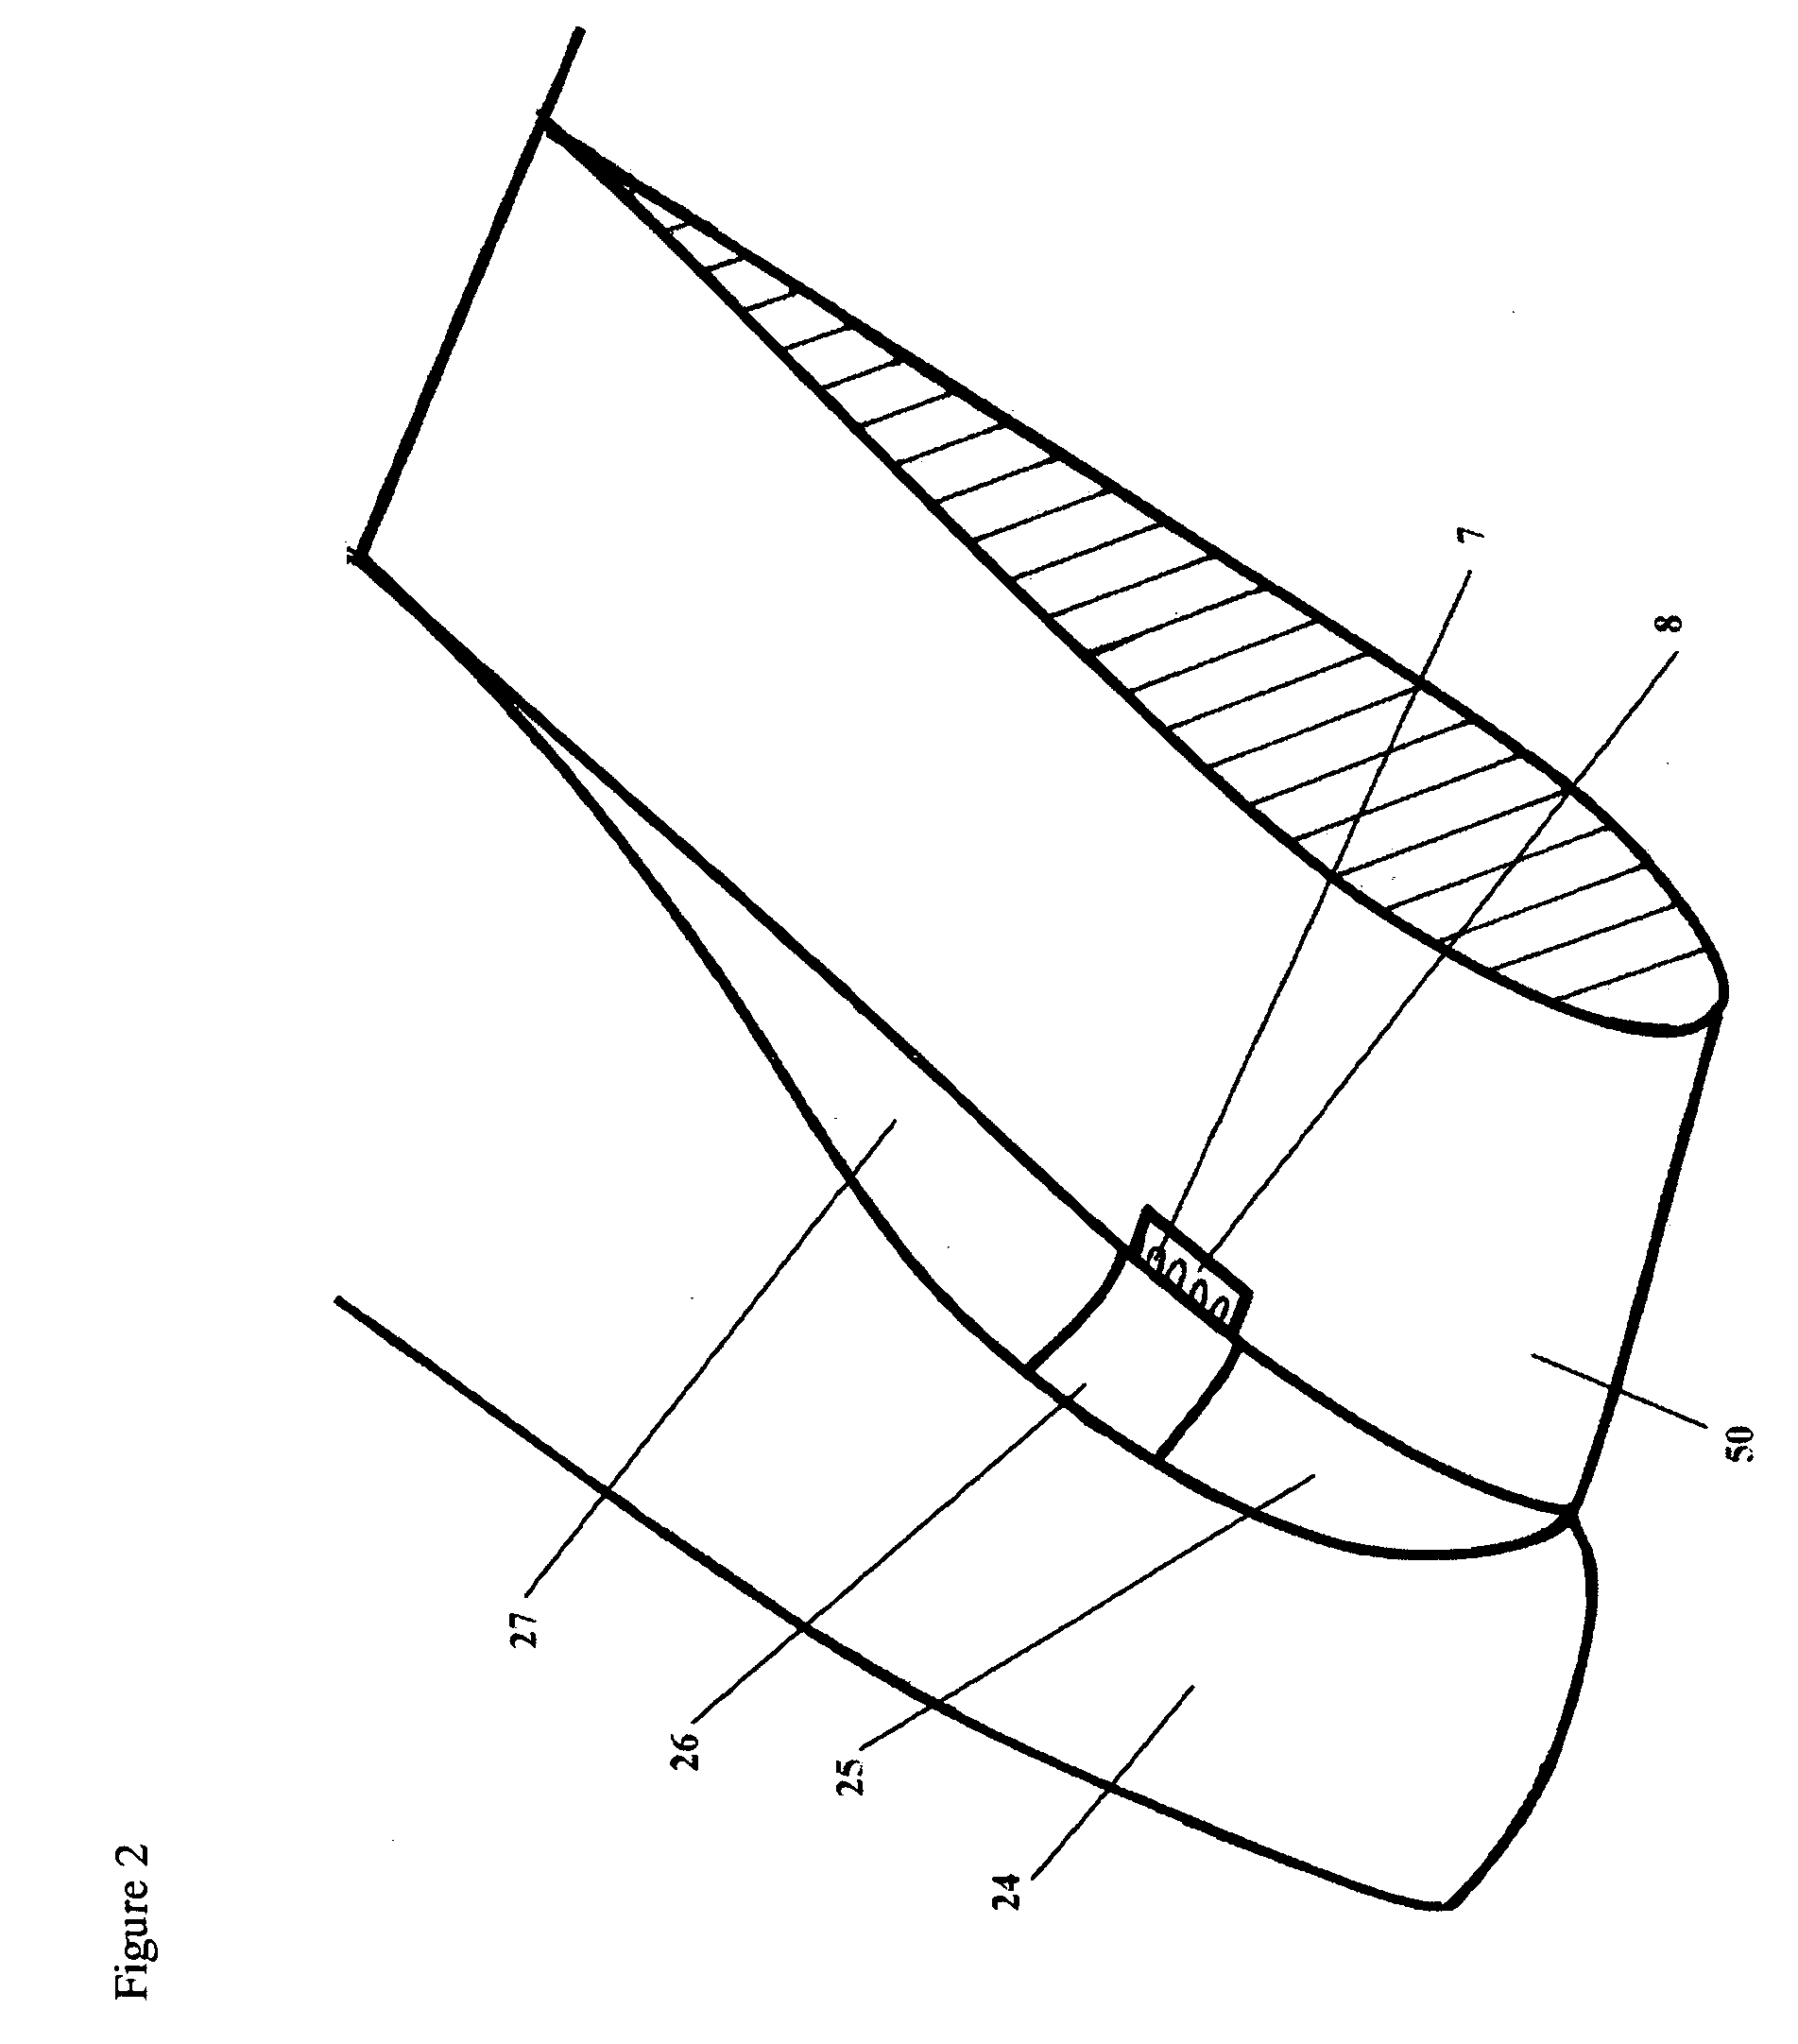 Folding Wing Root Mechanism